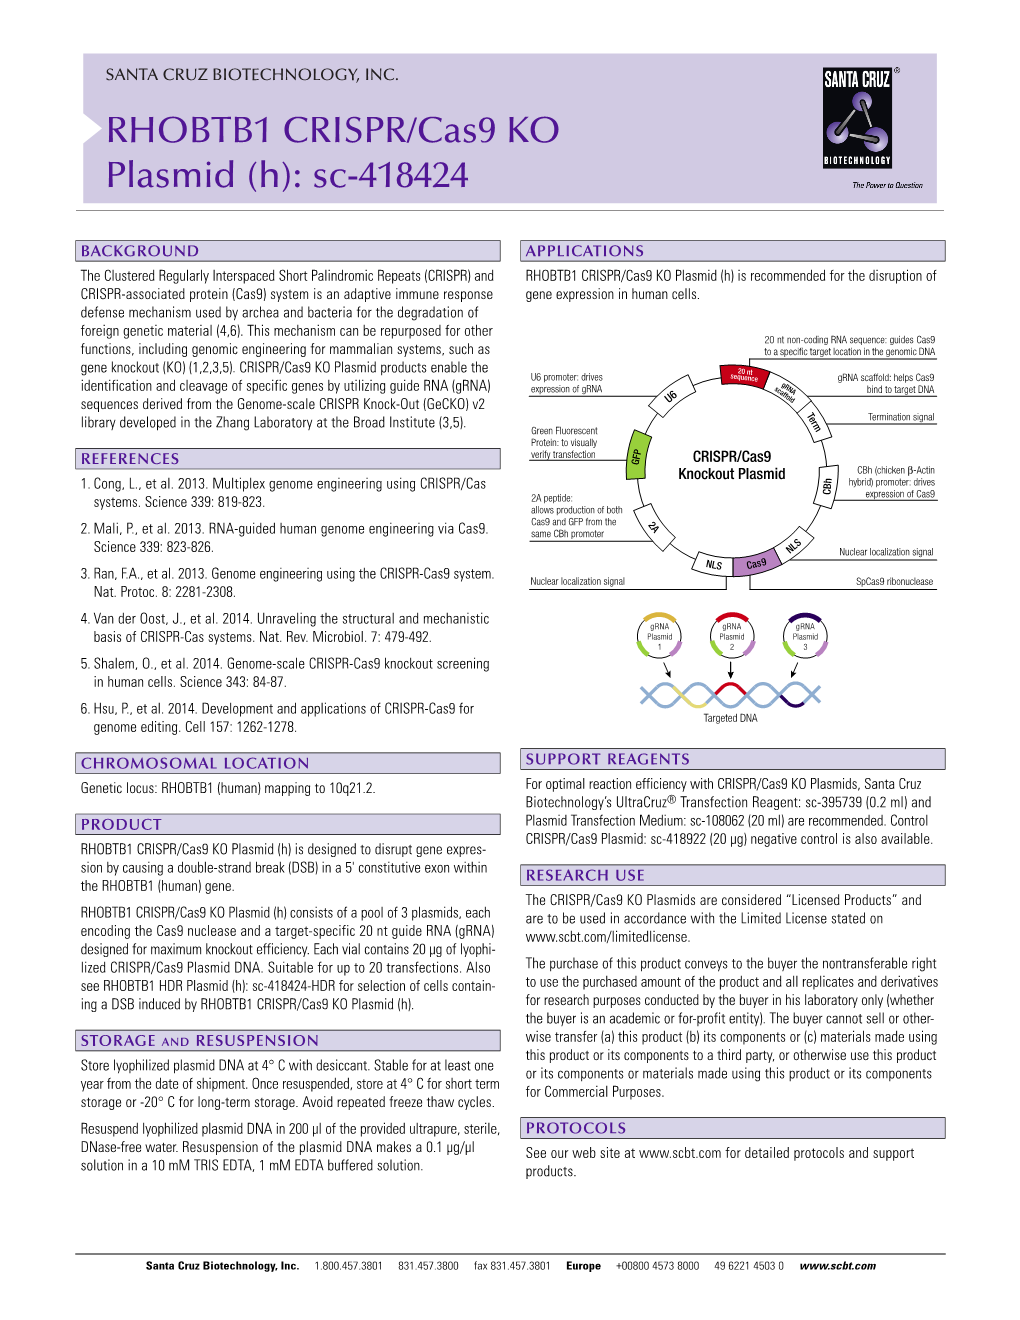 RHOBTB1 CRISPR/Cas9 KO Plasmid (H): Sc-418424